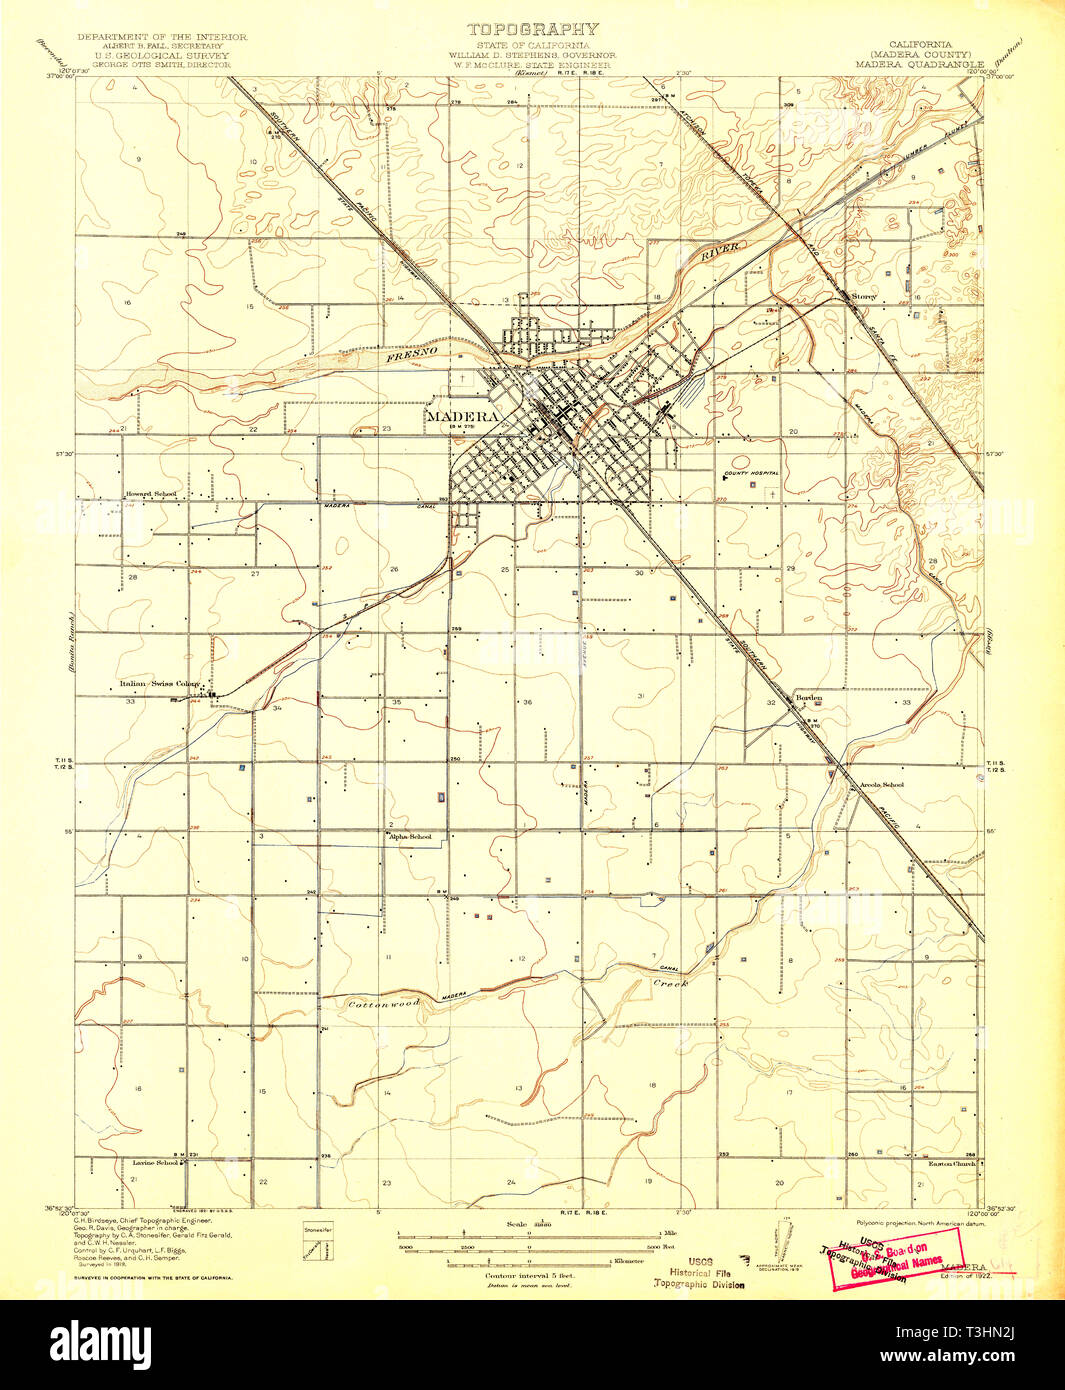 USGS TOPO Map California CA Madera 296284 1922 31680 Restoration Stock Photo